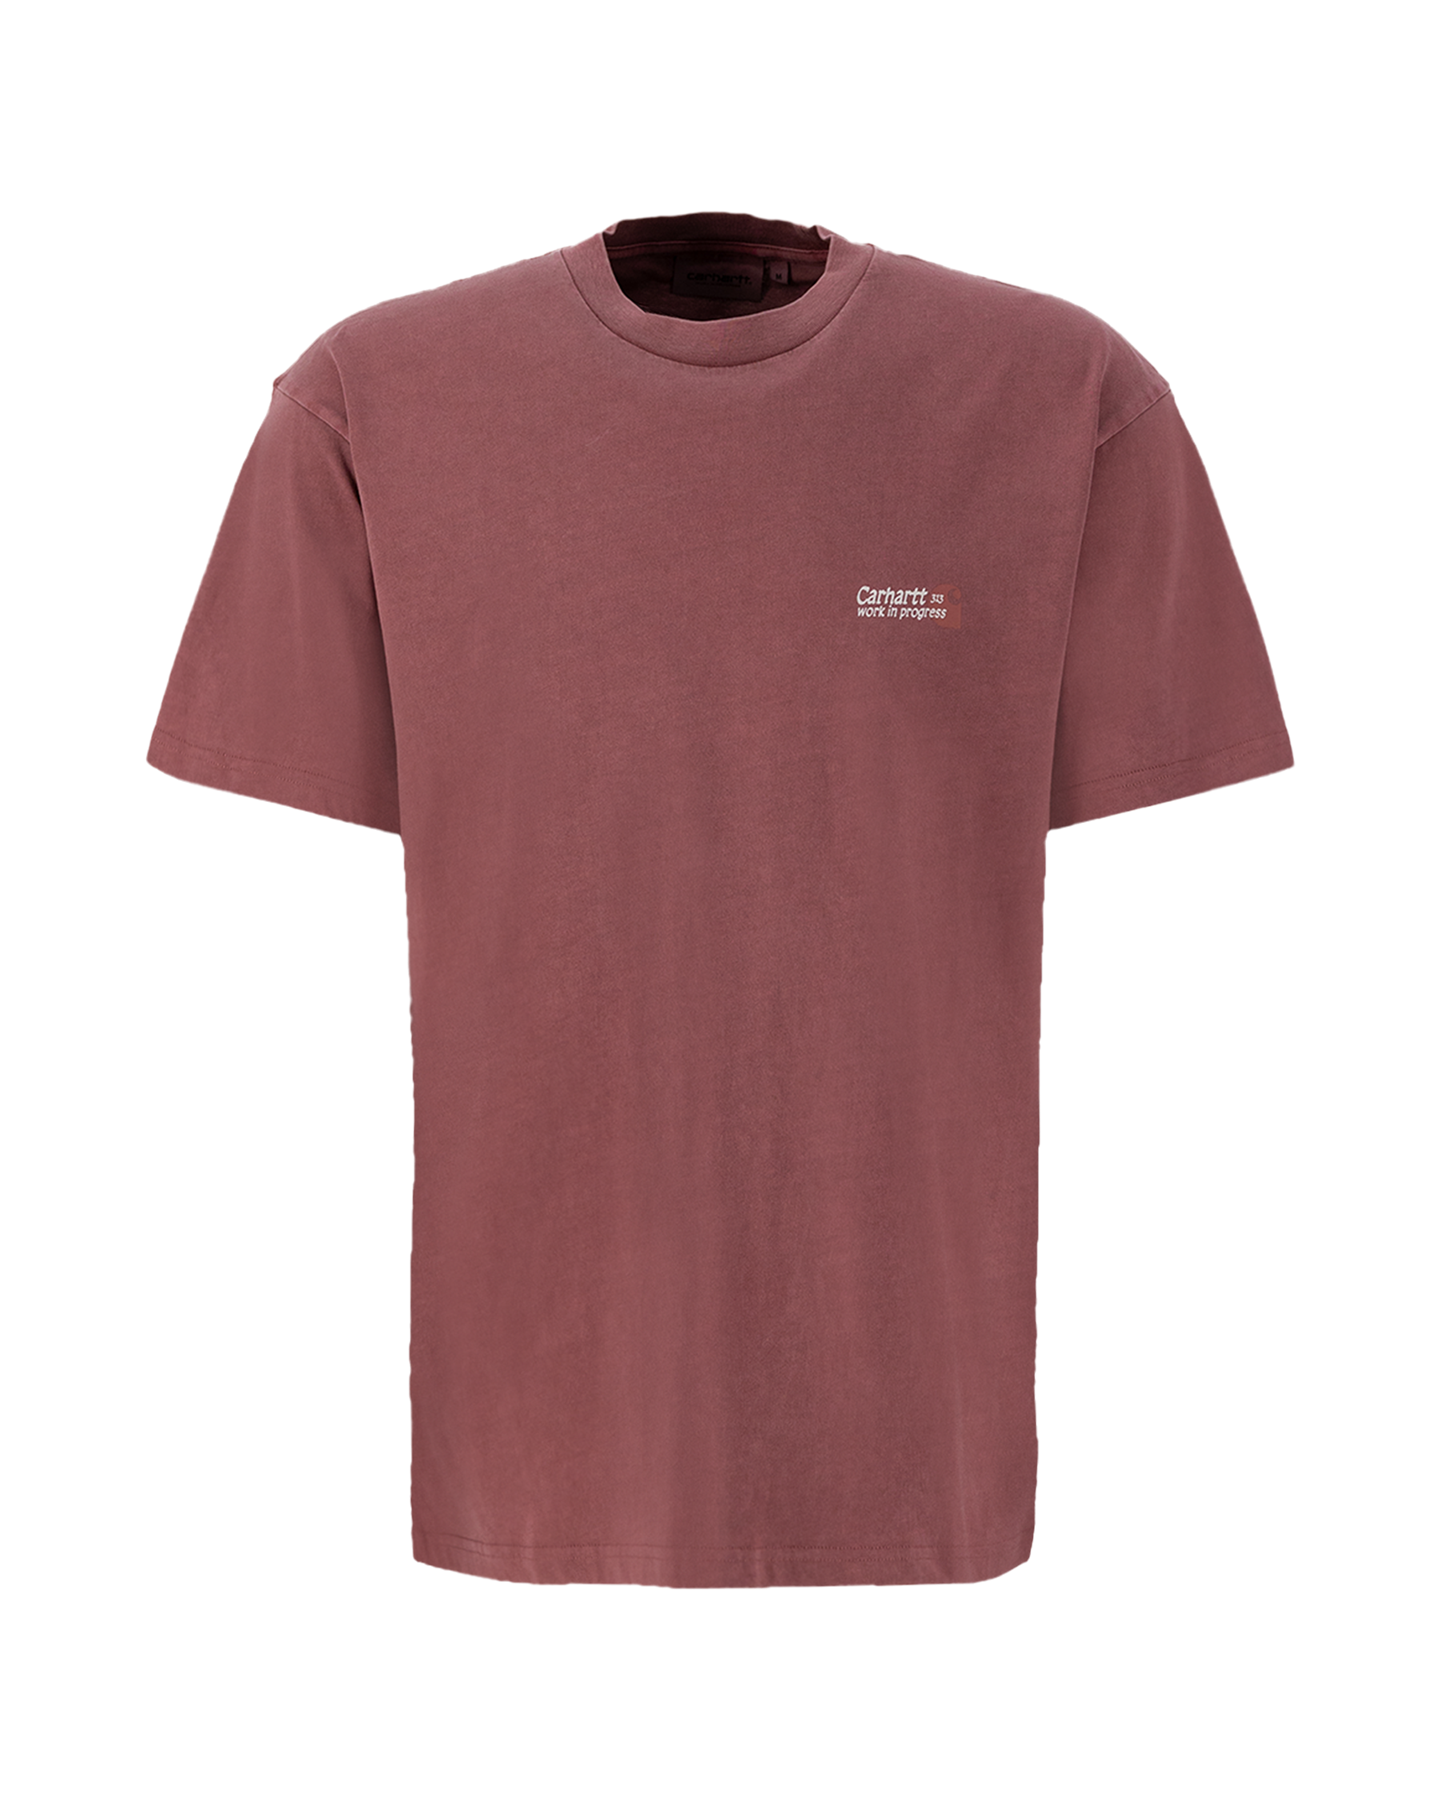 Carhartt WIP S/S Radiant T-Shirt ROOD 2